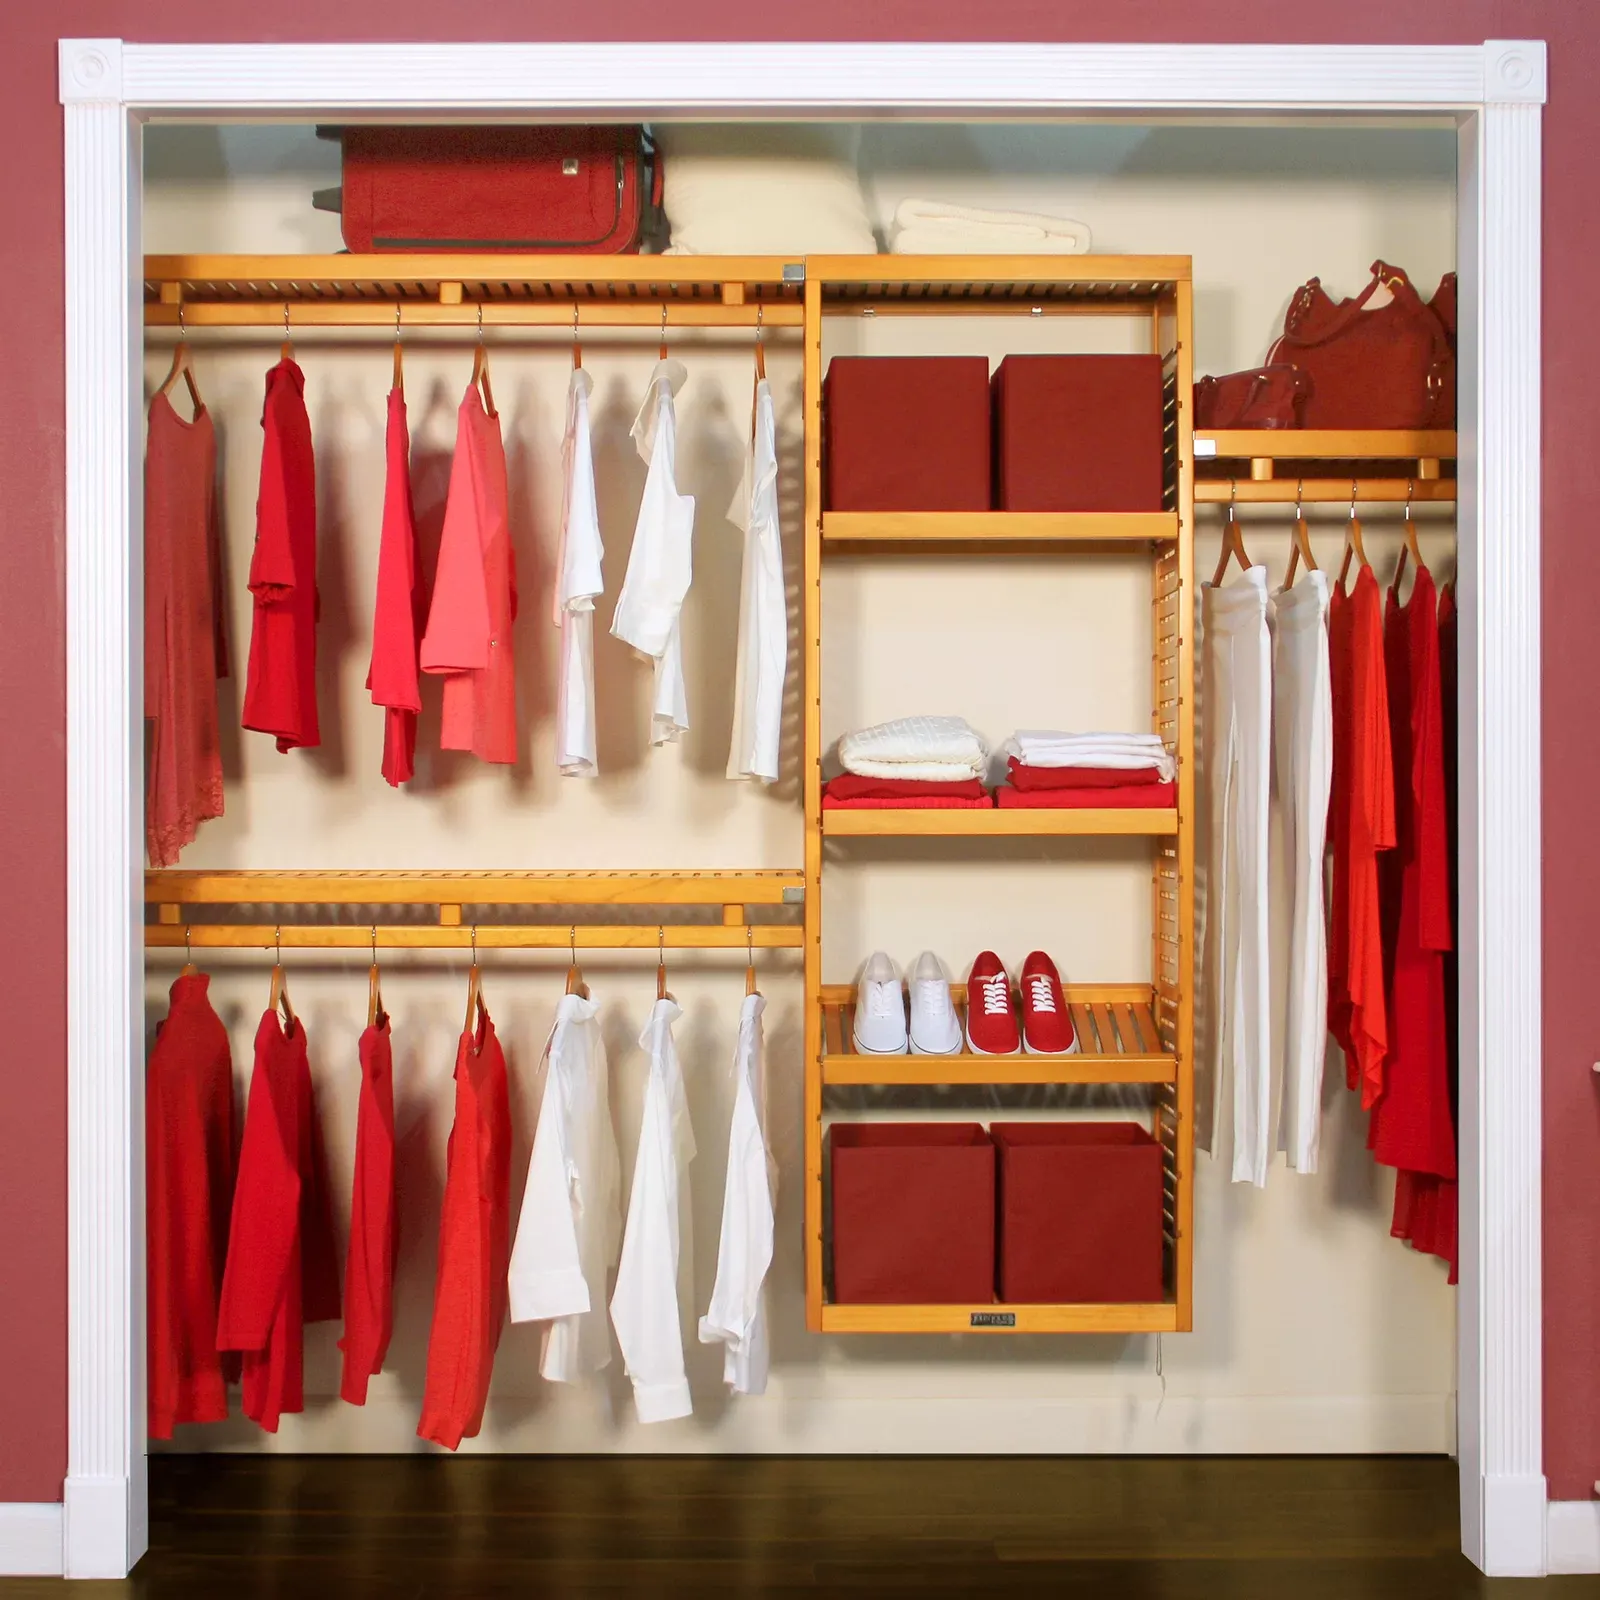 A Designer's Trick for Creating DIY Closet Shelving That Won't